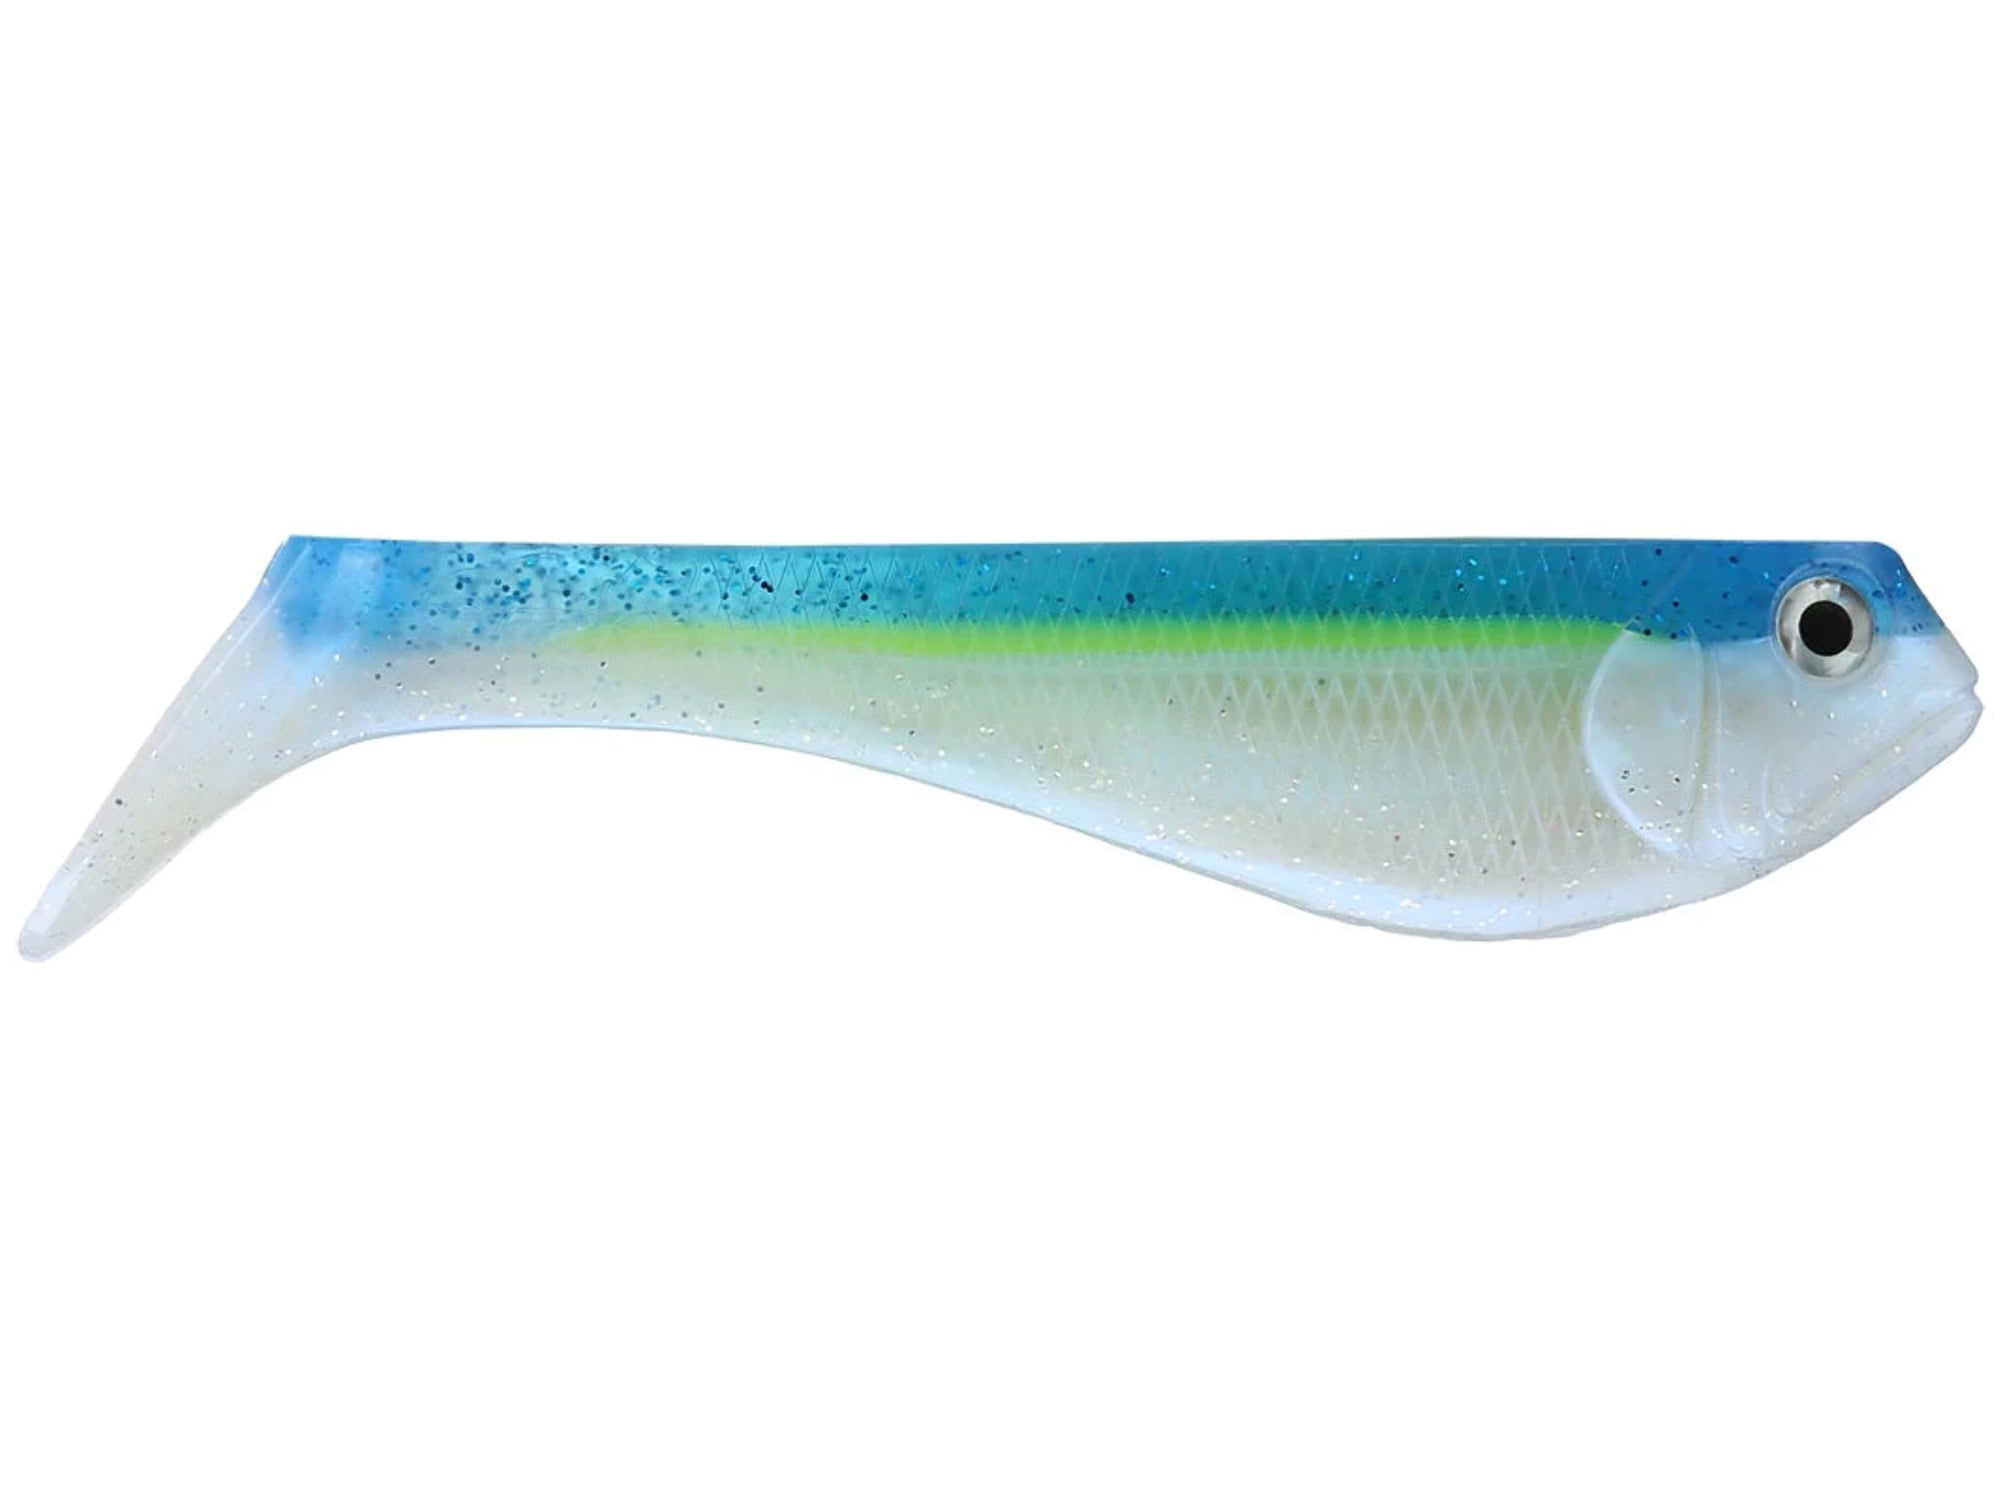 Jenko Booty Shaker SB 4.0 Threadfin Shad Soft Plastic Fishing Lure